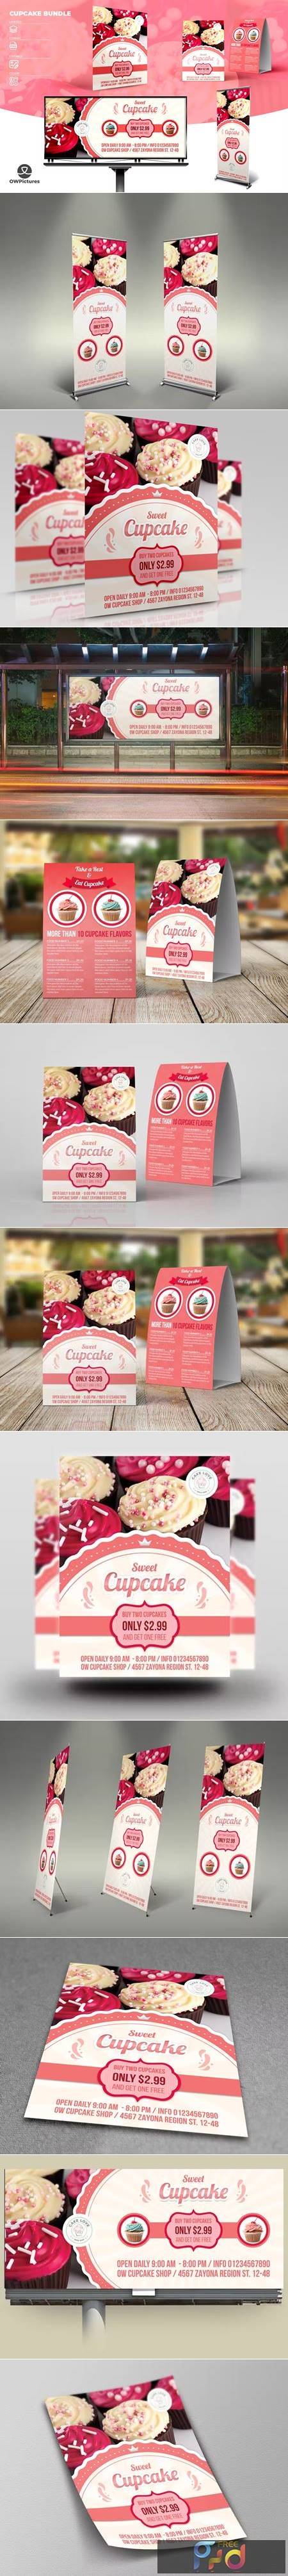 Cupcake Advertising Pack H2ZEDUX 1